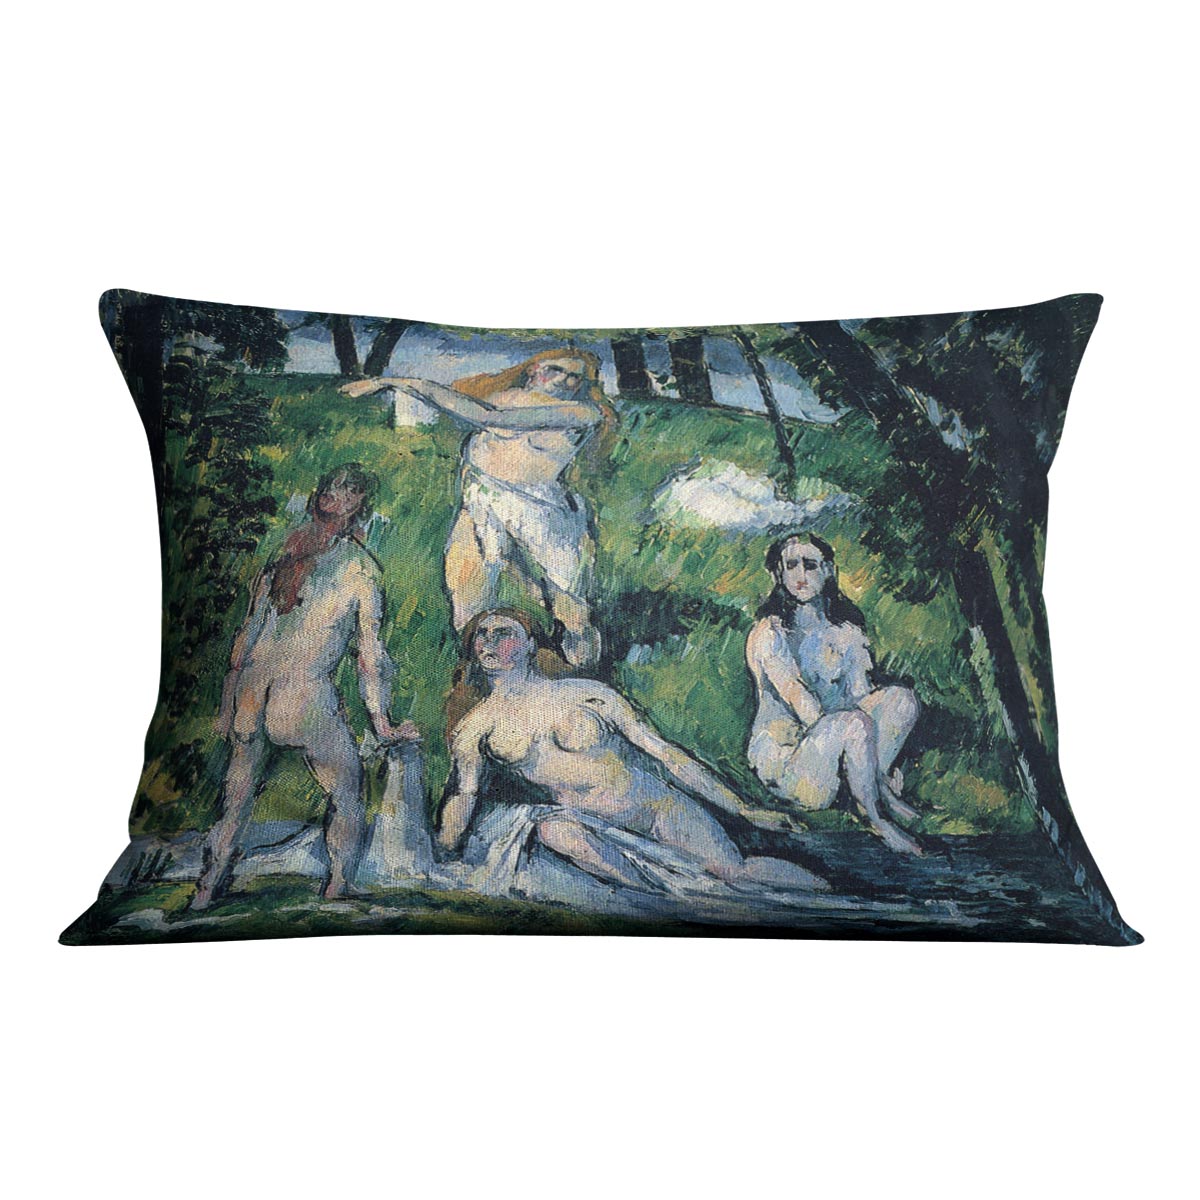 Bathers by Cezanne Cushion - Canvas Art Rocks - 4